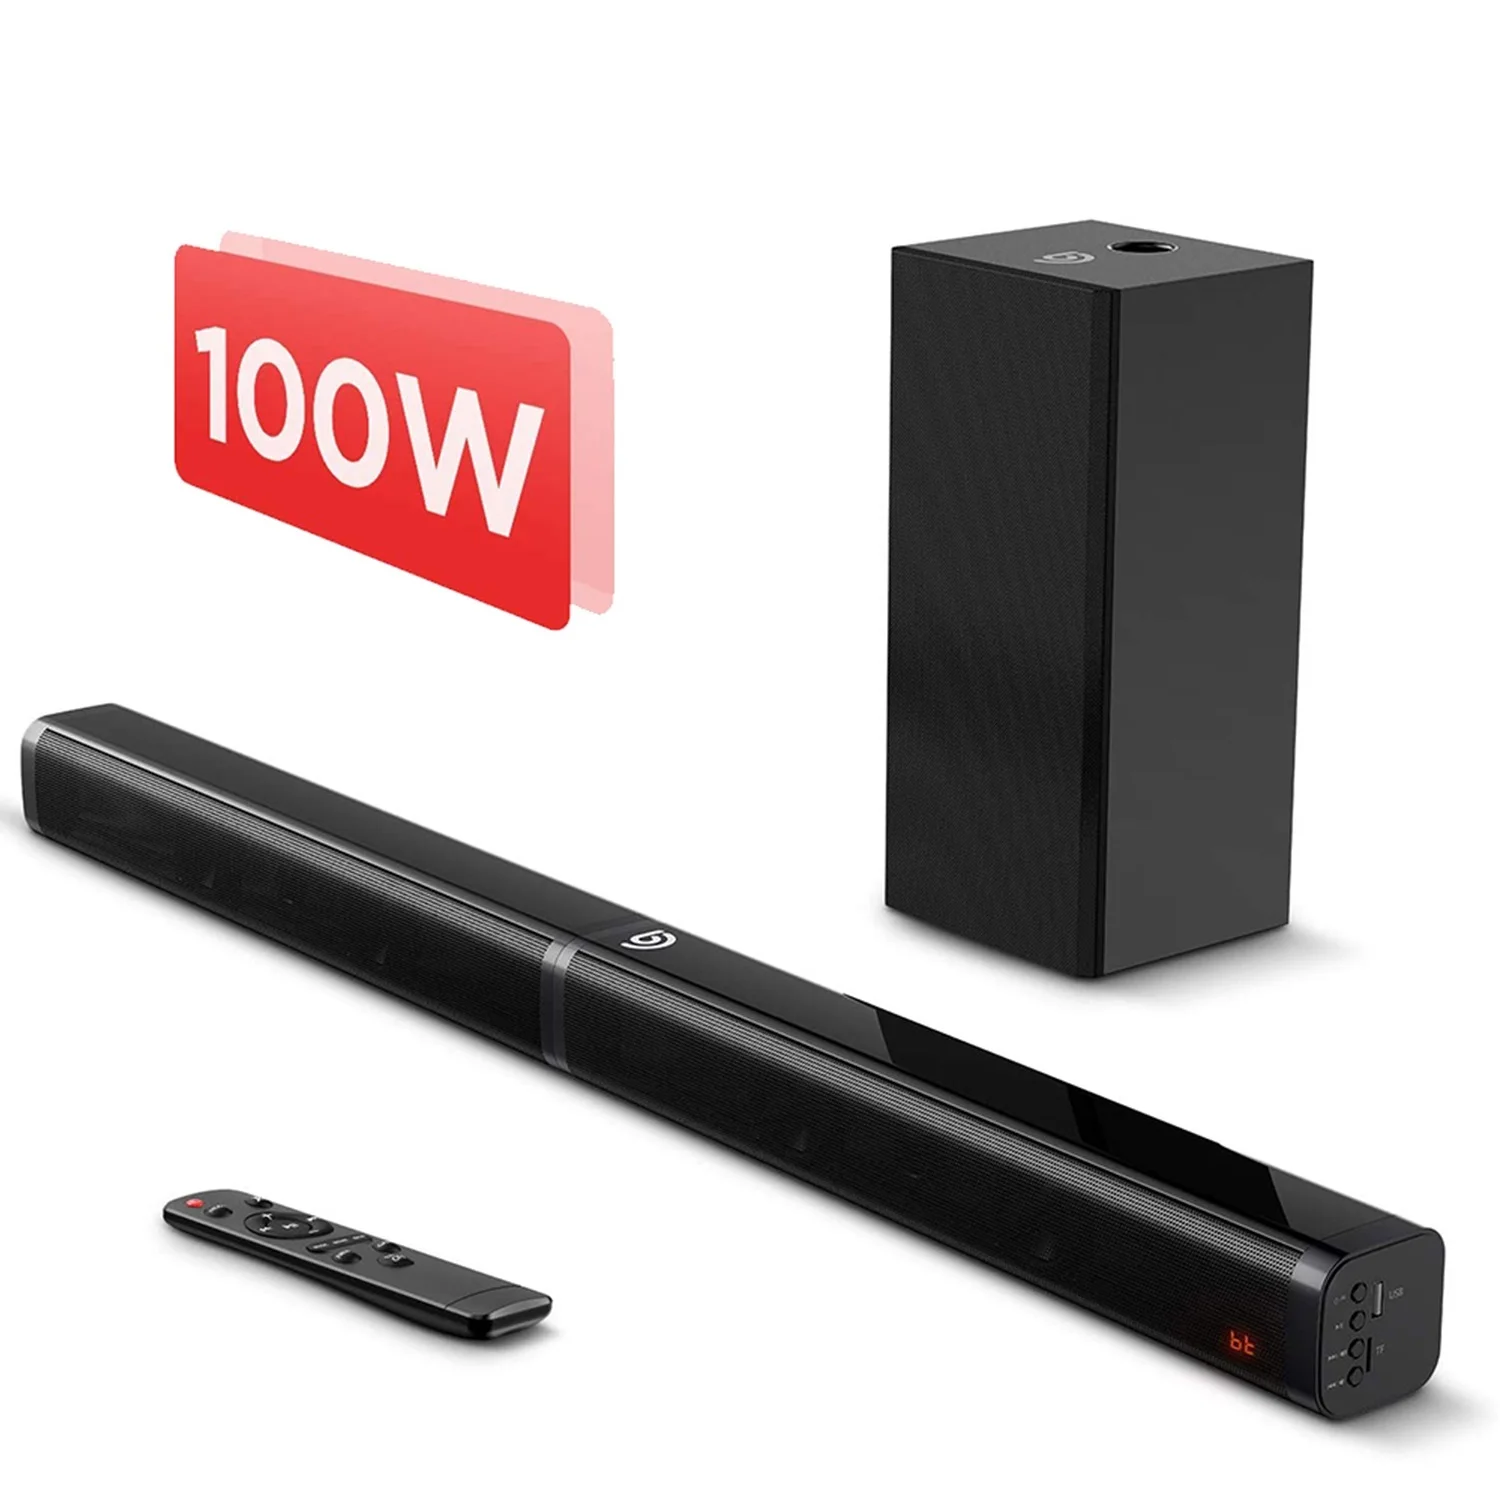 

nes 100W TV SoundBar 2.1 Bluetooth Speaker 5.0 Home Theater Sound System 3D Surround Sound Bar Remote Control With Subwoofer